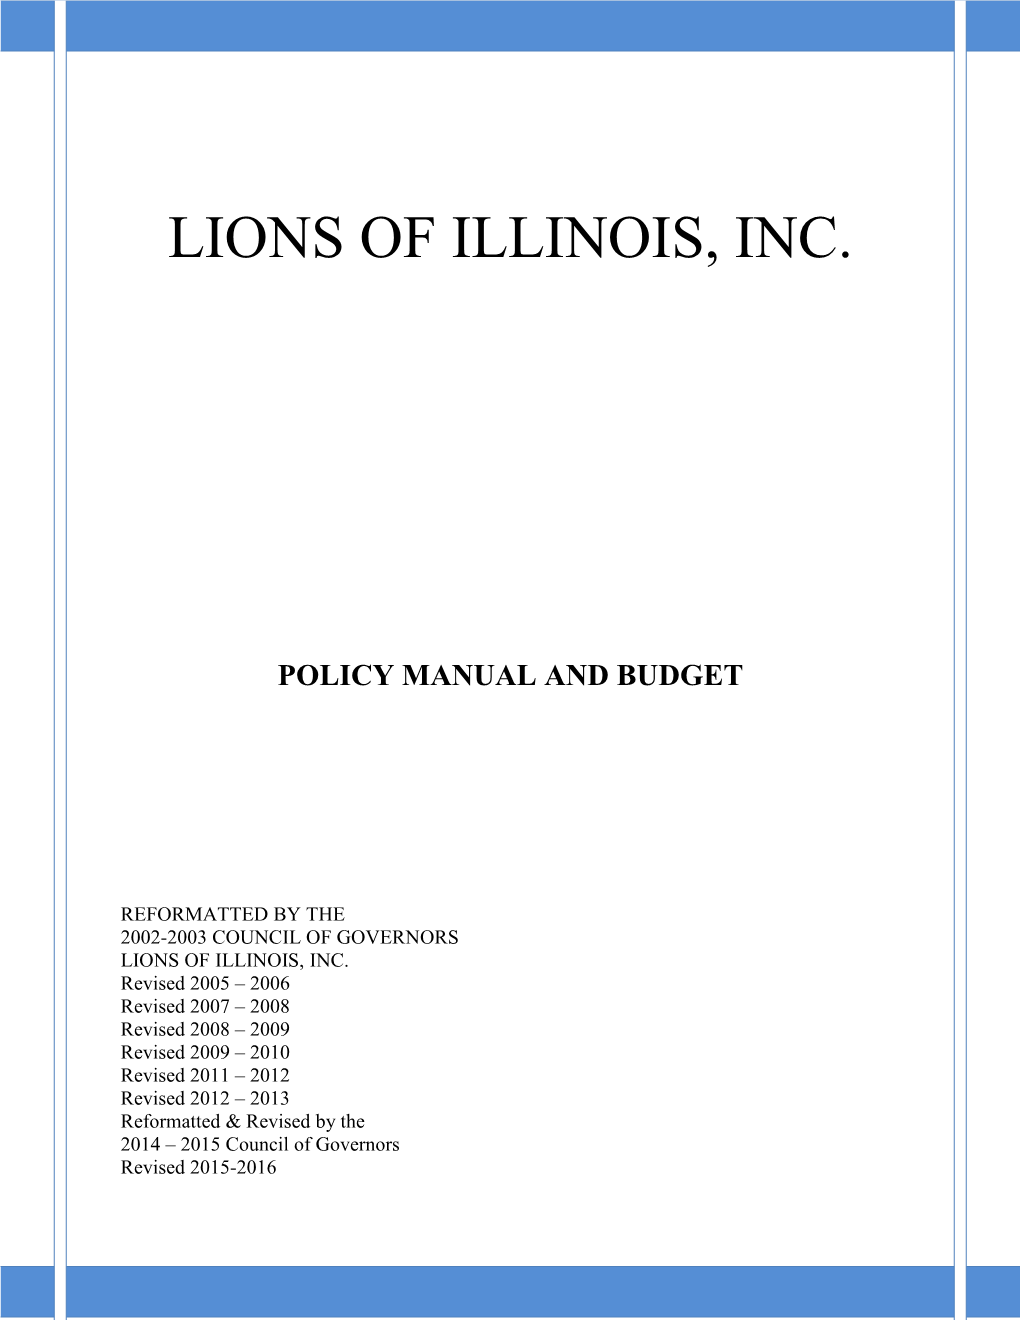 Lions of Illinois, Inc